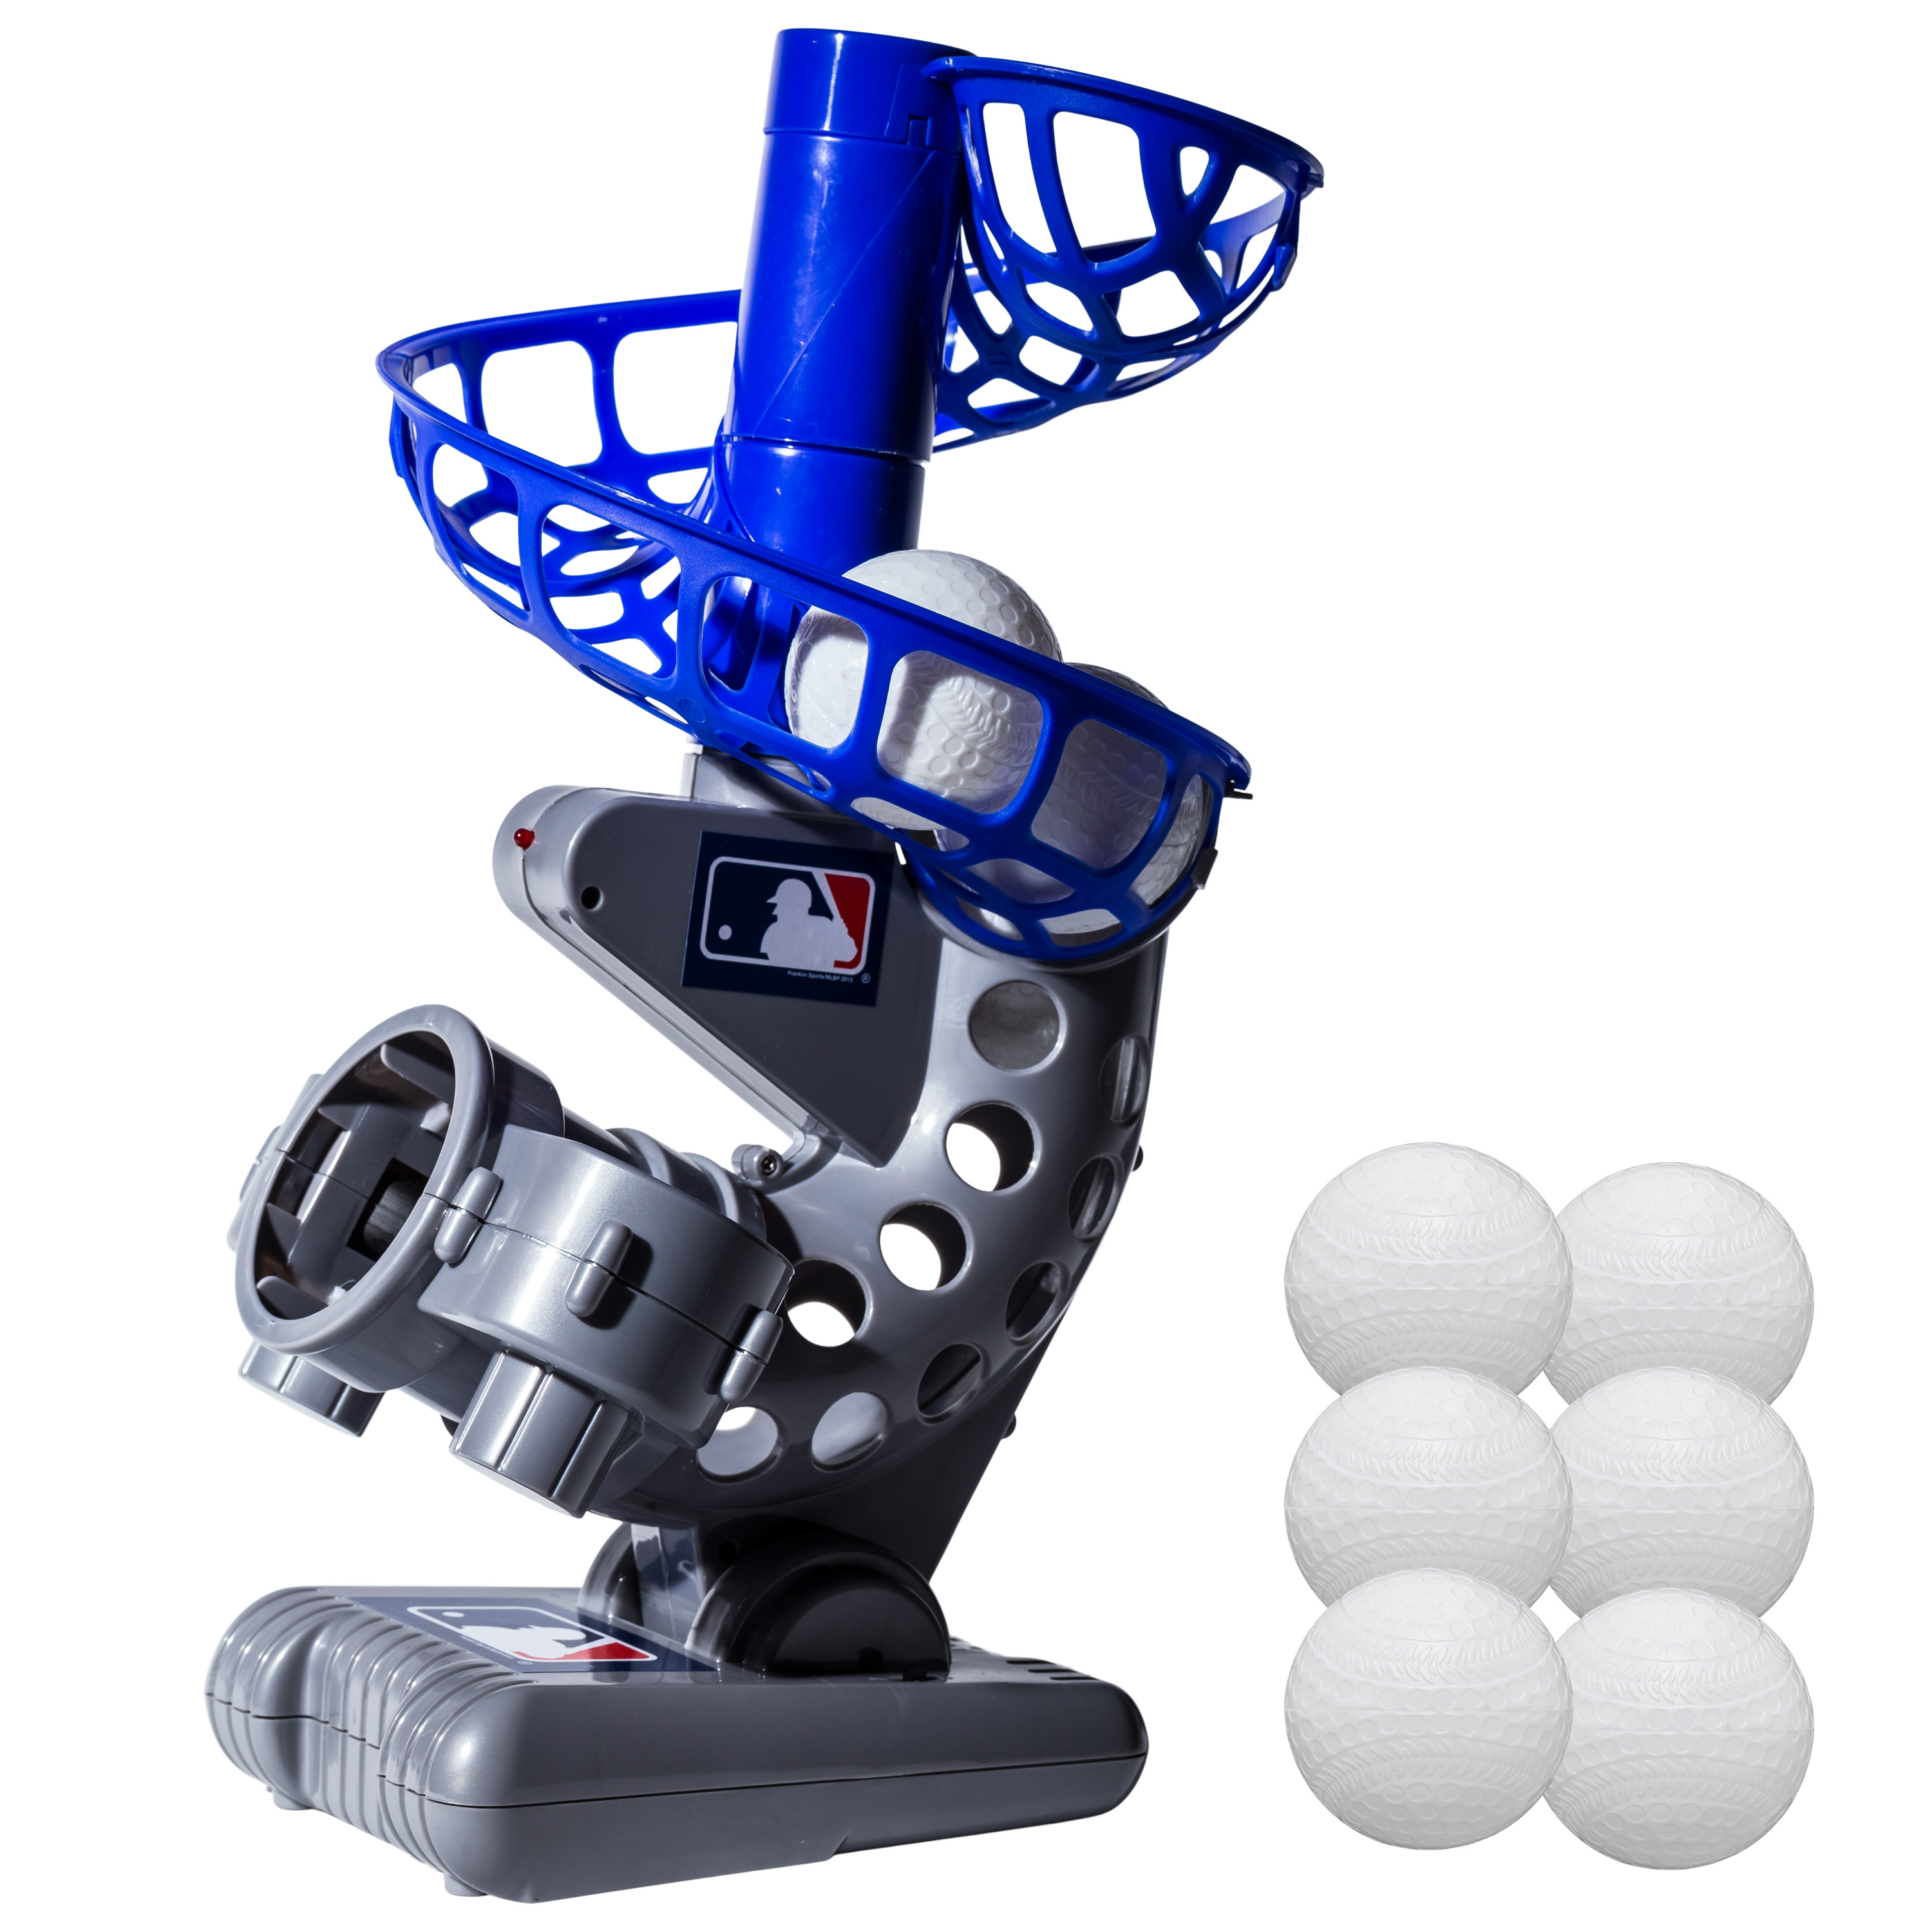 Franklin Sports Kids Baseball Pitching Machine Height Adjustable – 6 Plastic Balls - Grey/Blue - image 1 of 10